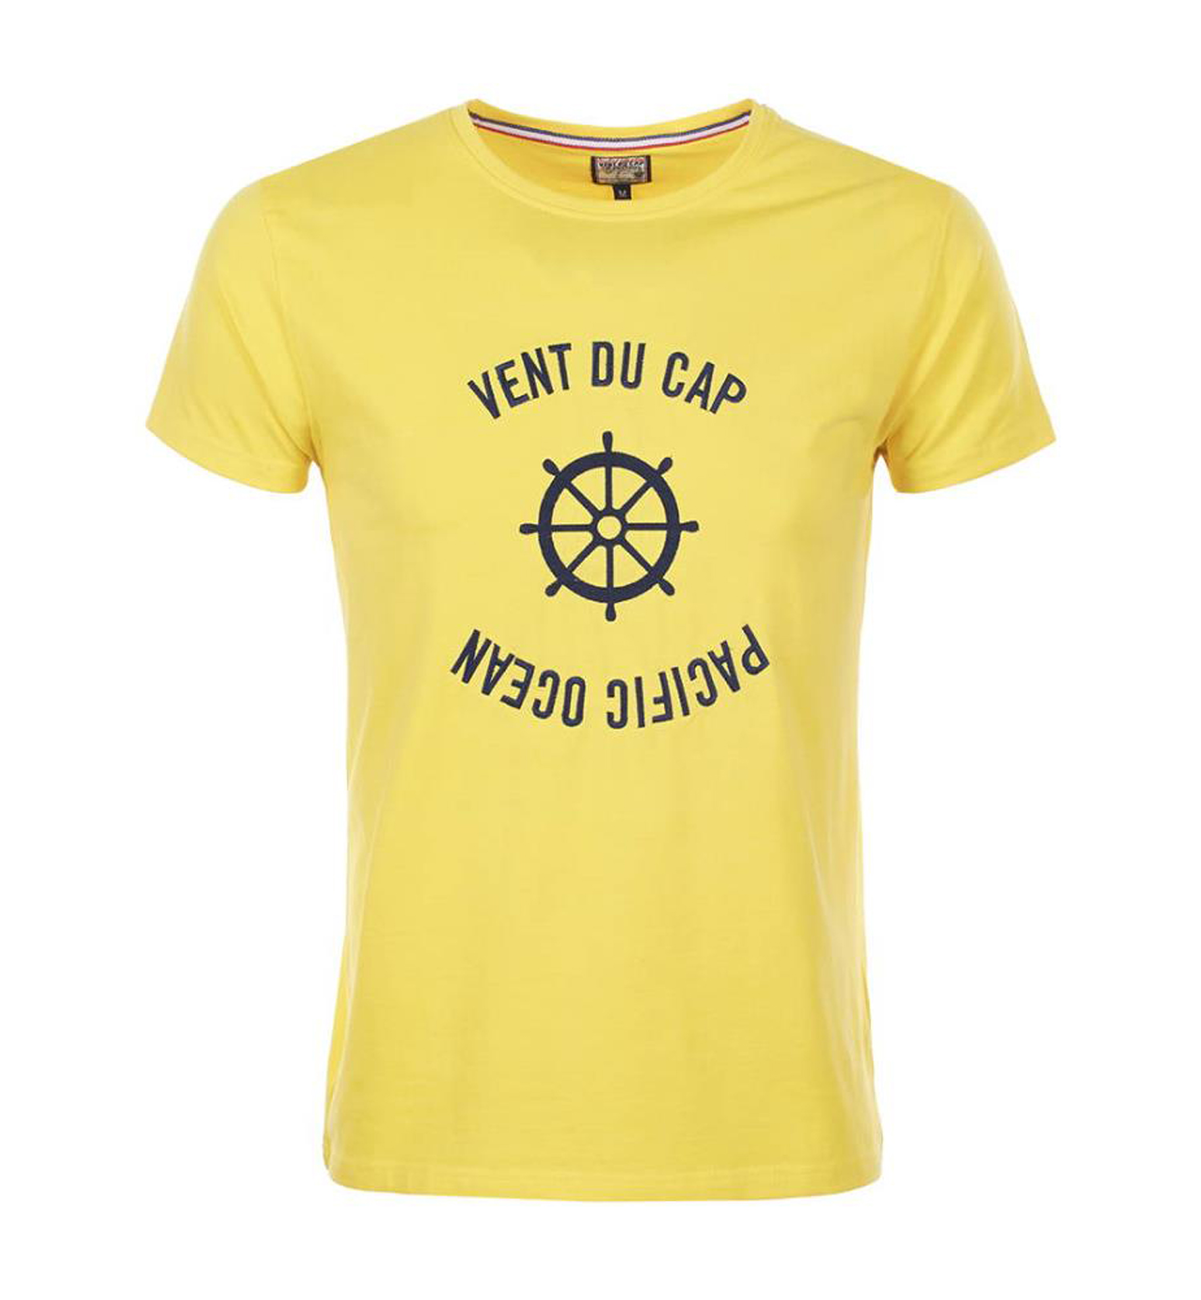 Mode- Lifestyle Garçon Vent Du Cap T-shirt...